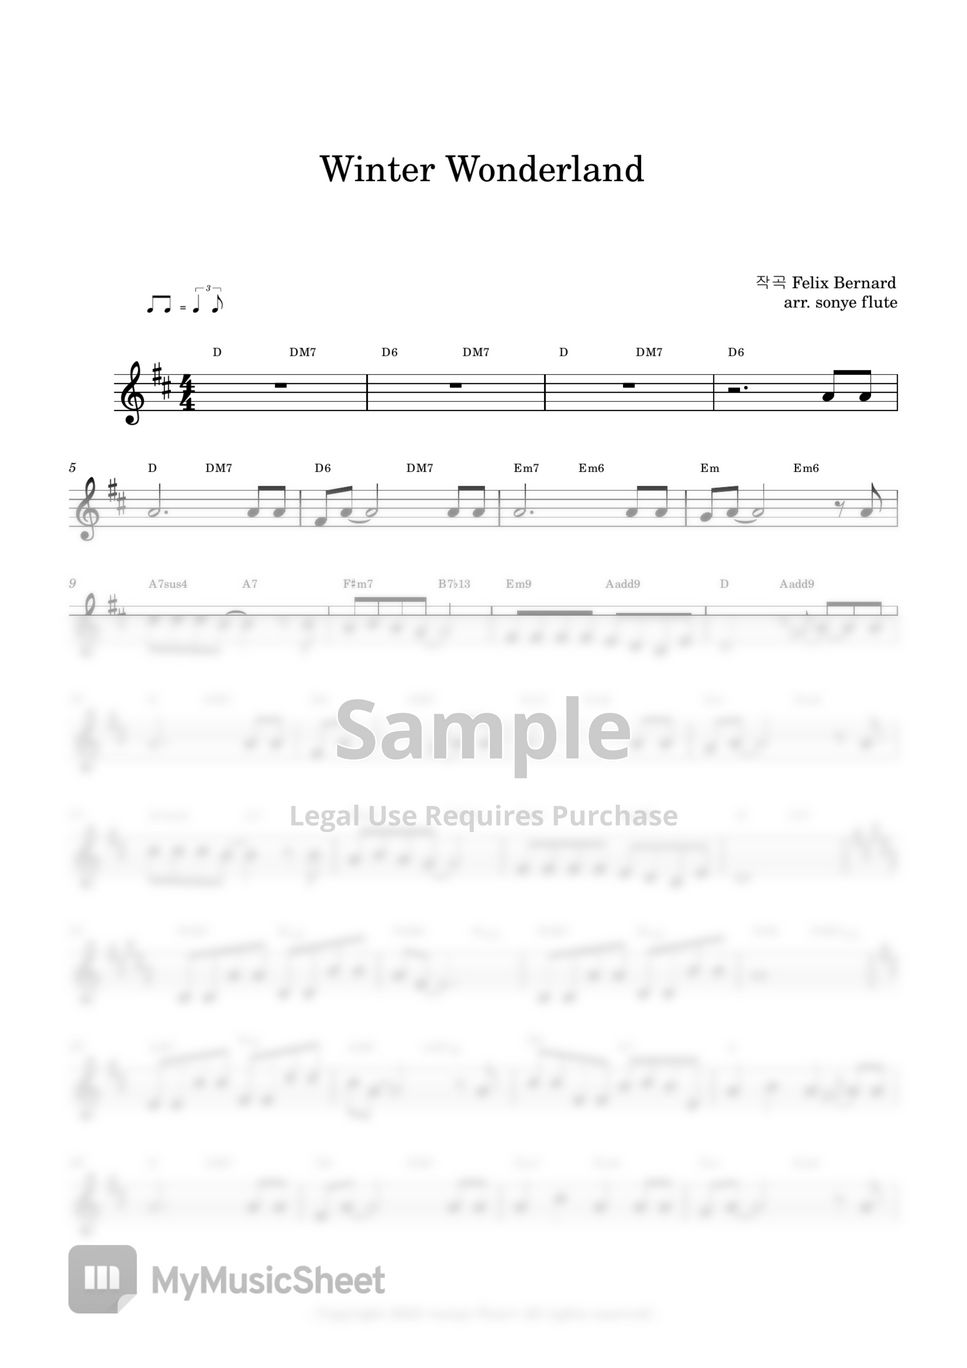 Christmas Carol - Winter Wonderland (Flute Sheet Music) by sonye flute